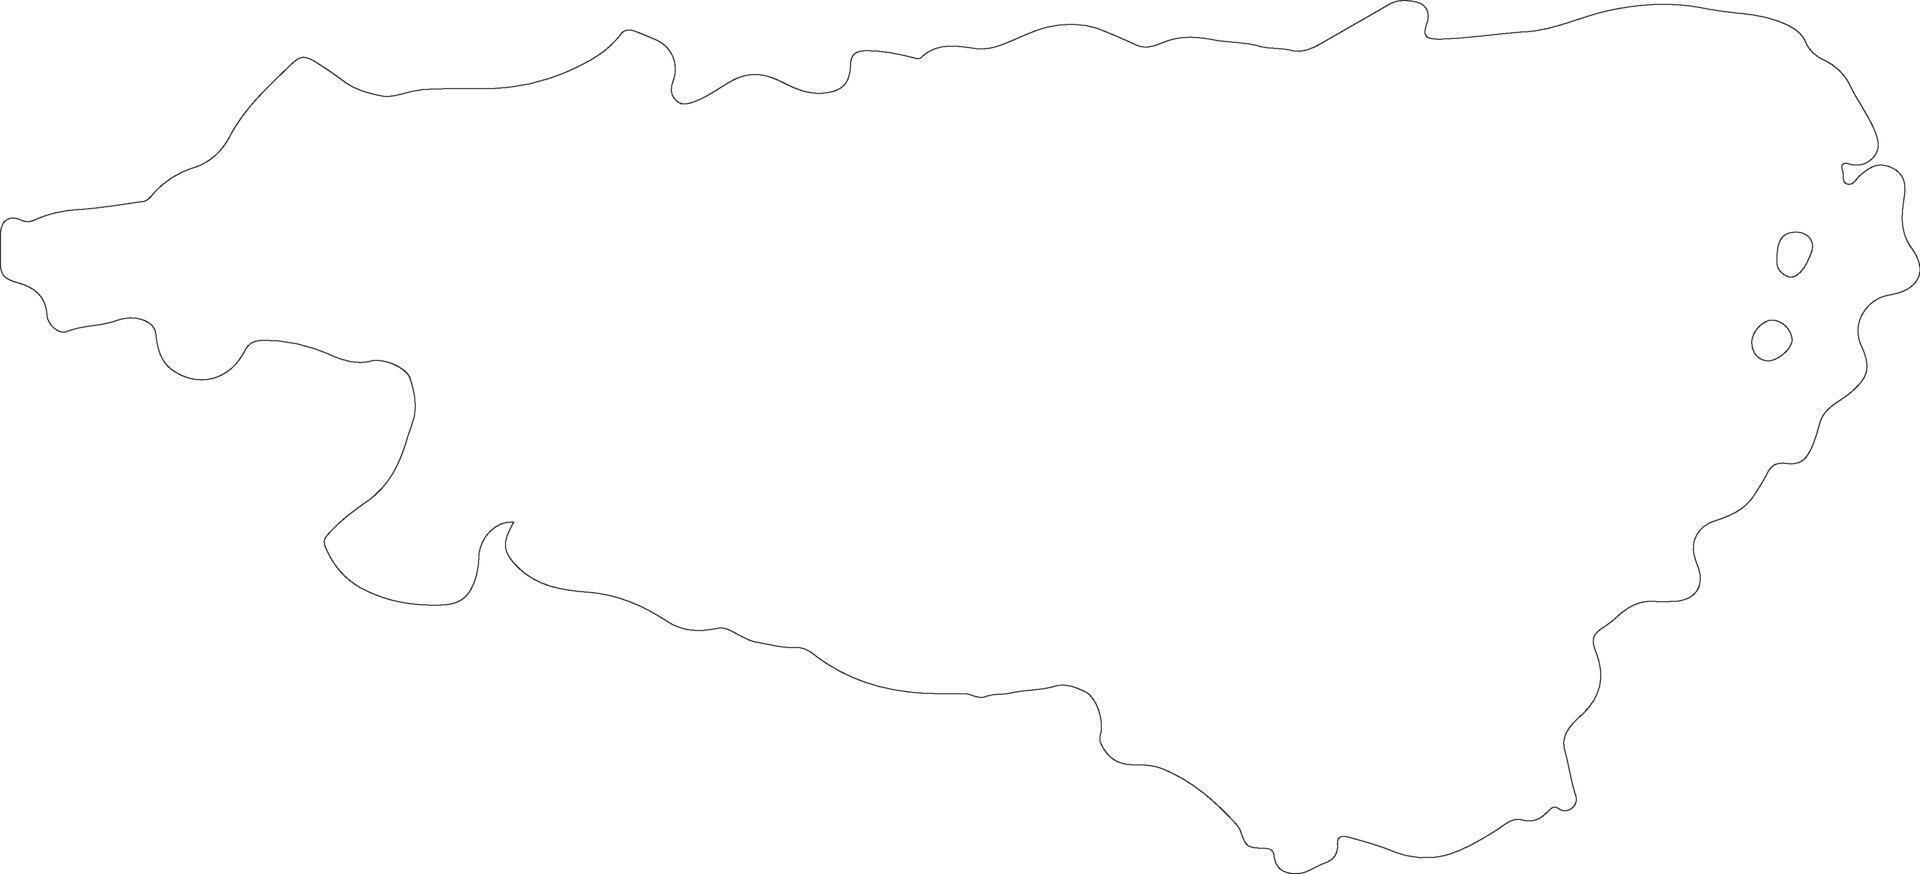 Pyrenees-Atlantiques France outline map vector